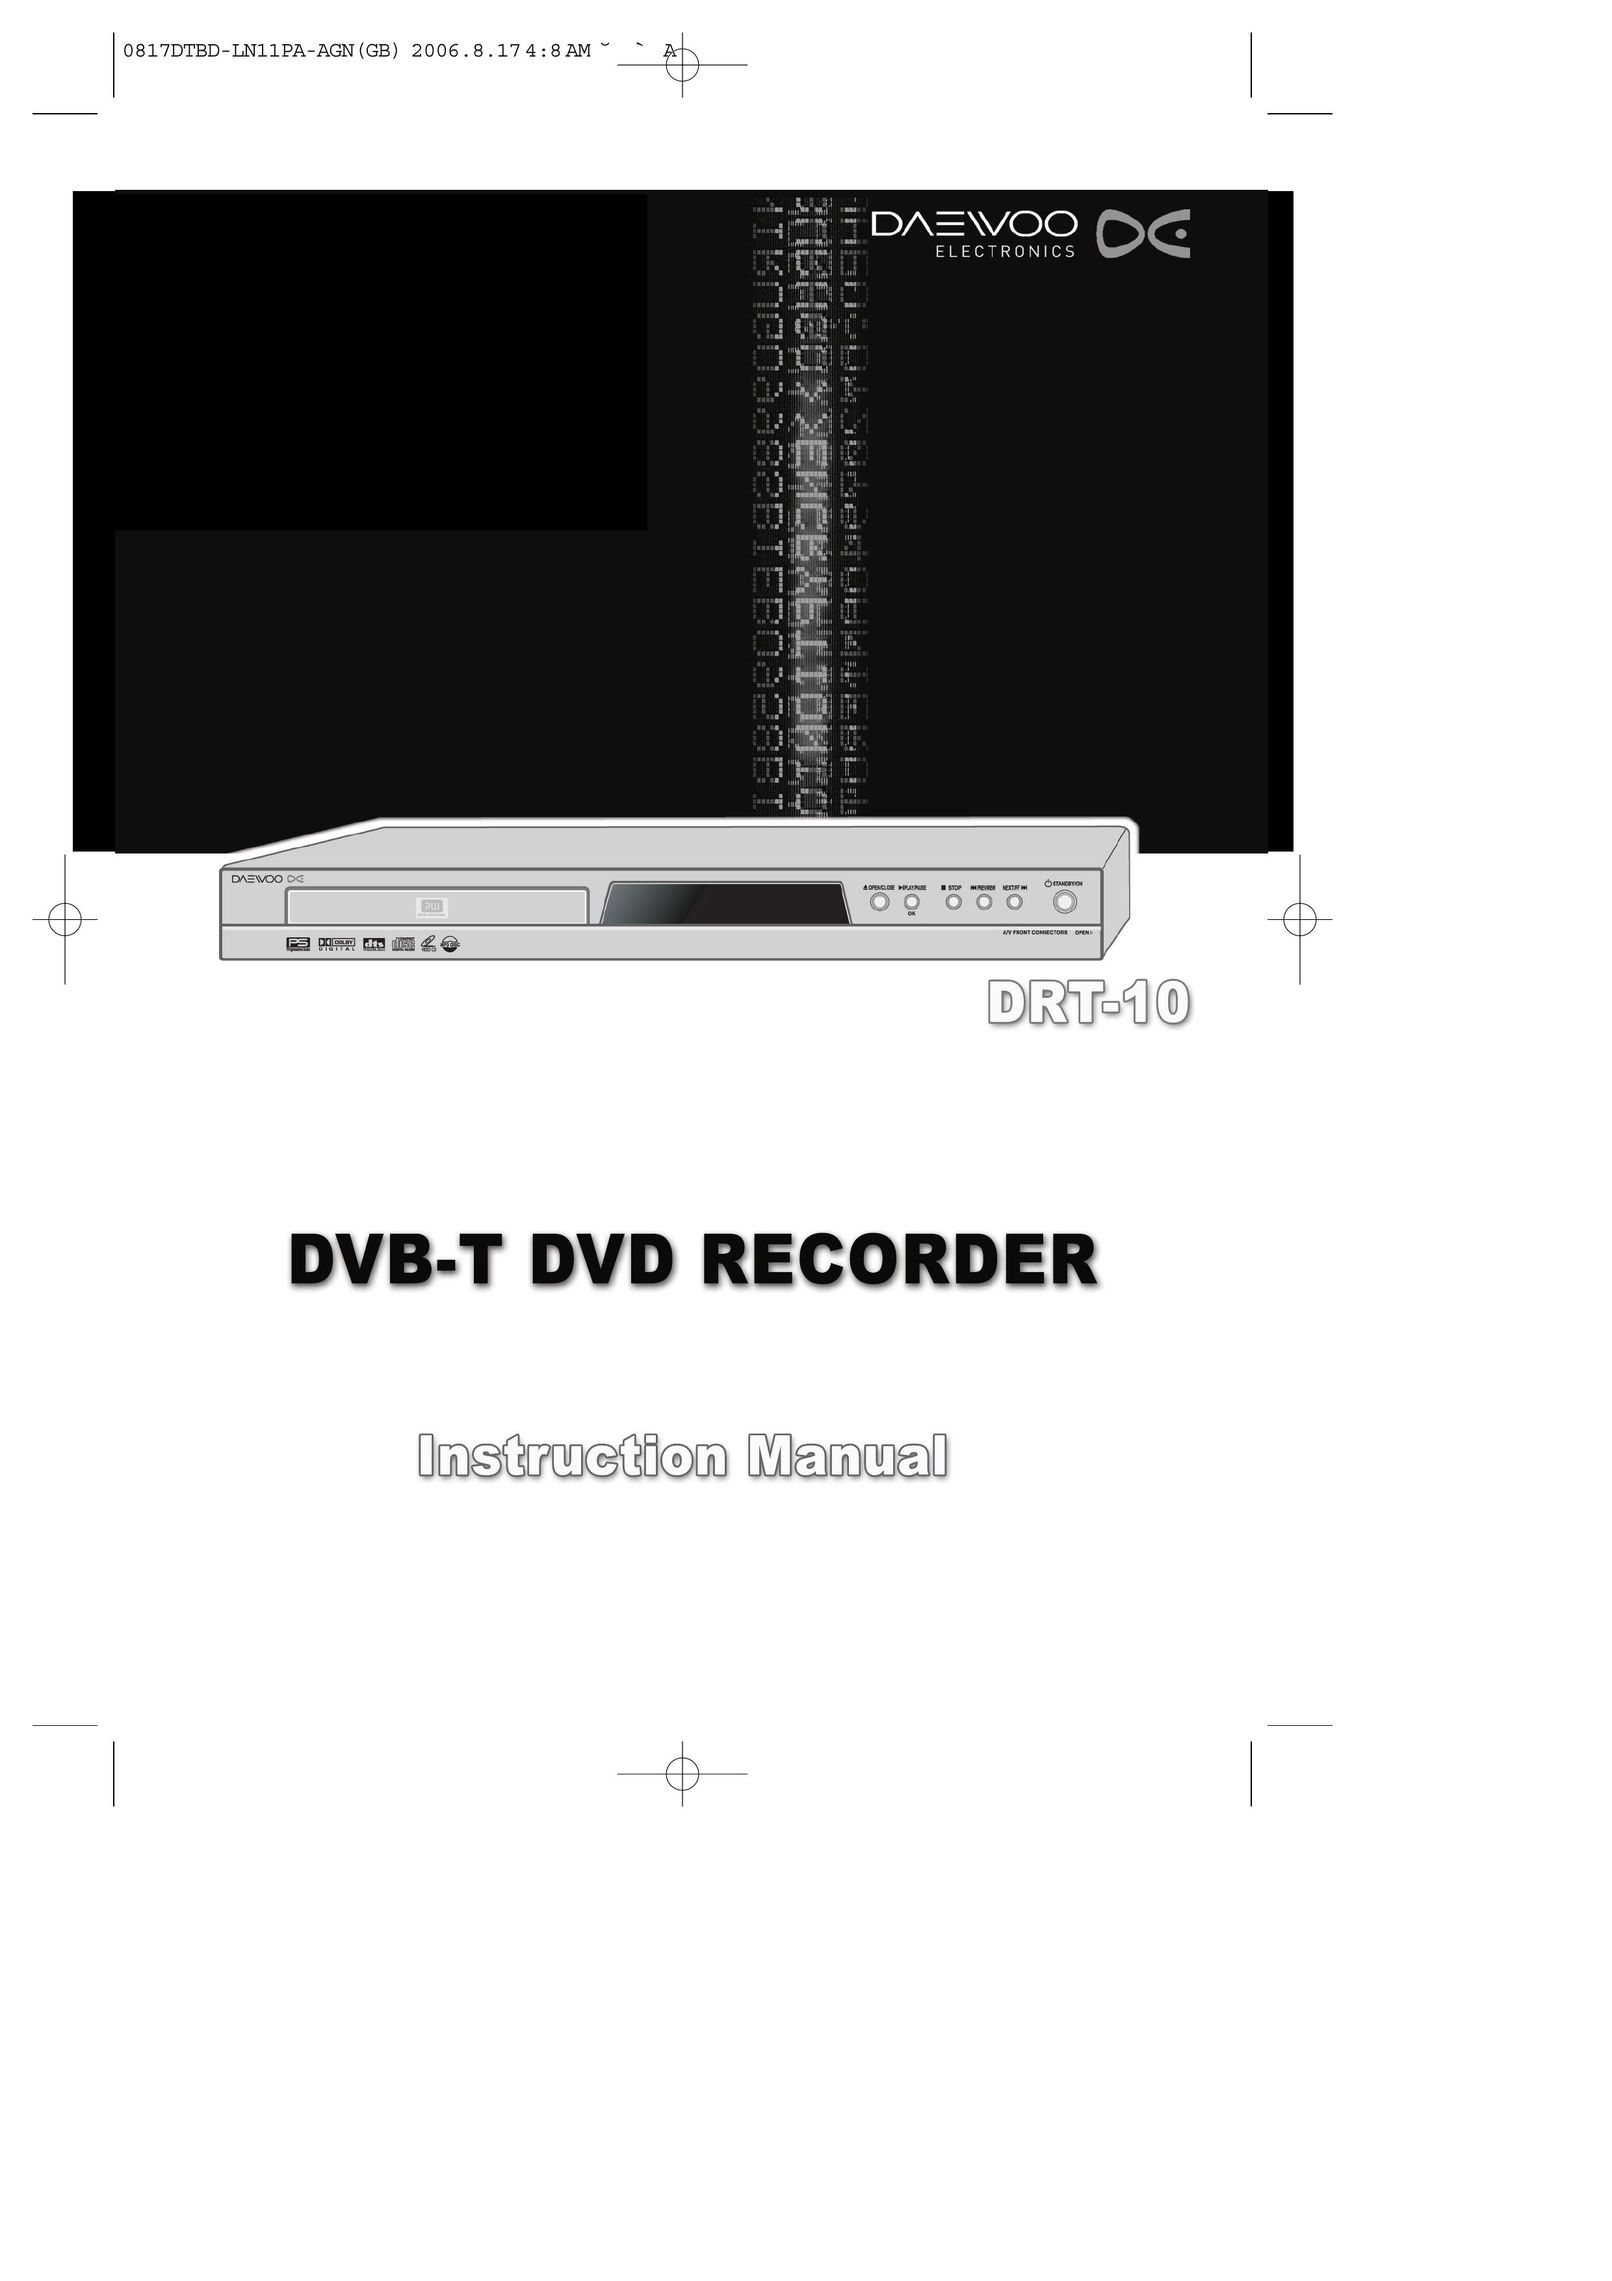 Daewoo DRT-10 DVD Recorder User Manual